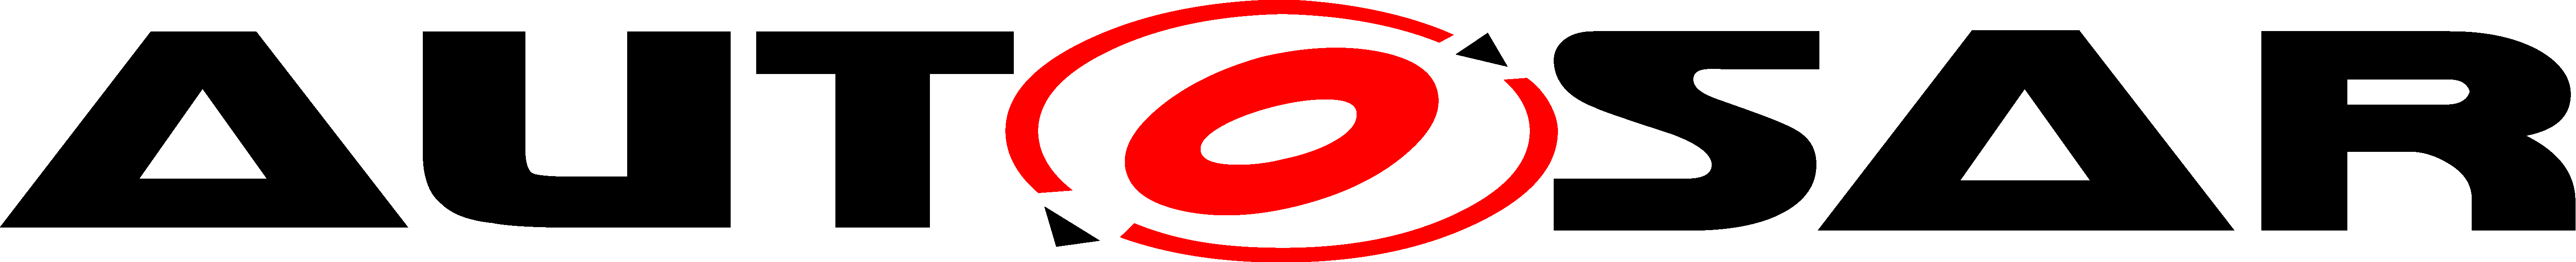 AUTOSAR_Logo_Black